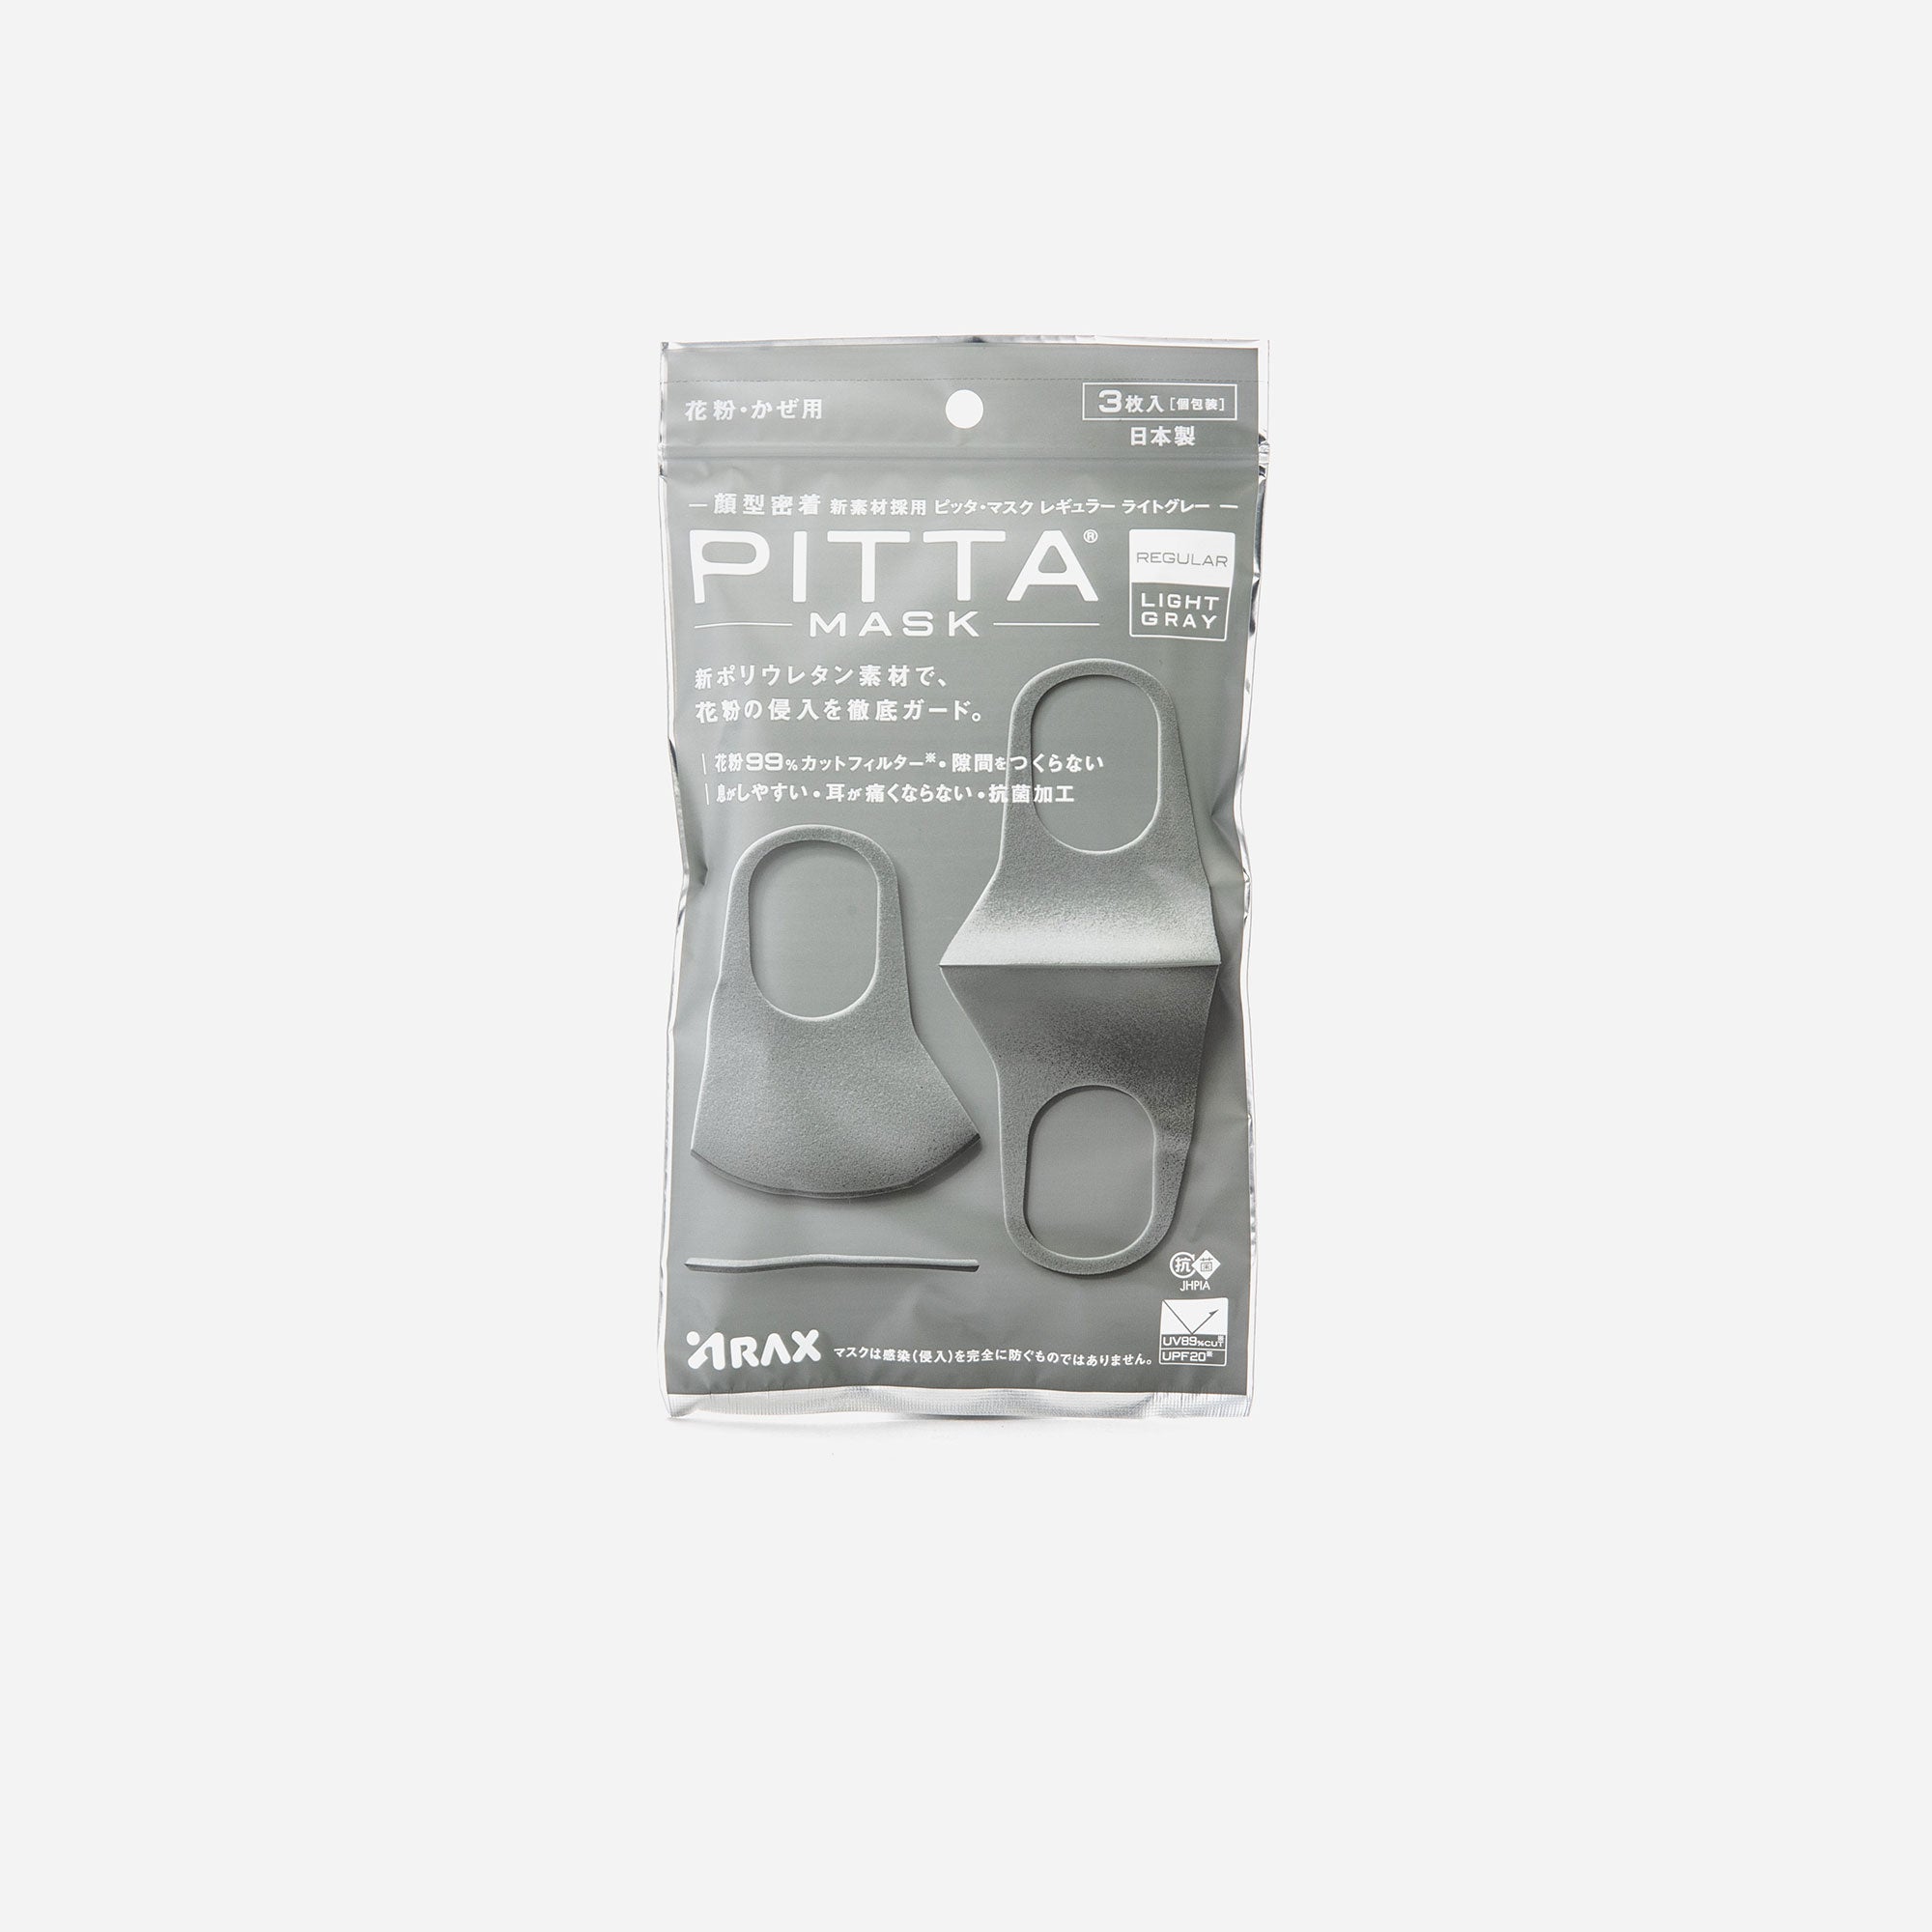 Pitta Mask Light Grey